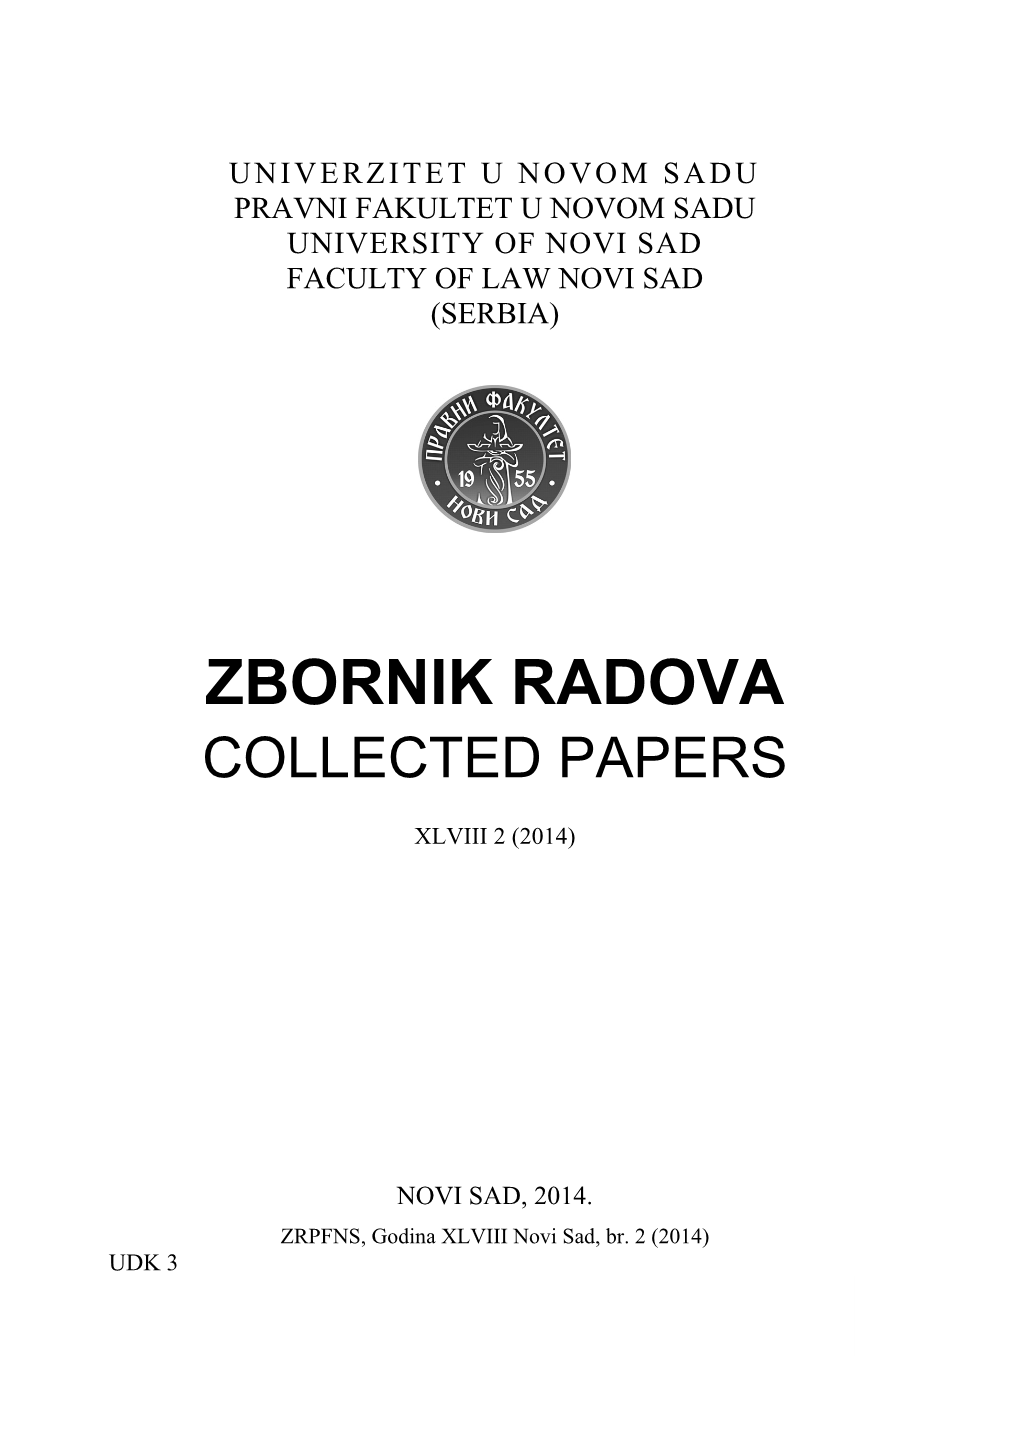 Zbornik Radova Collected Papers